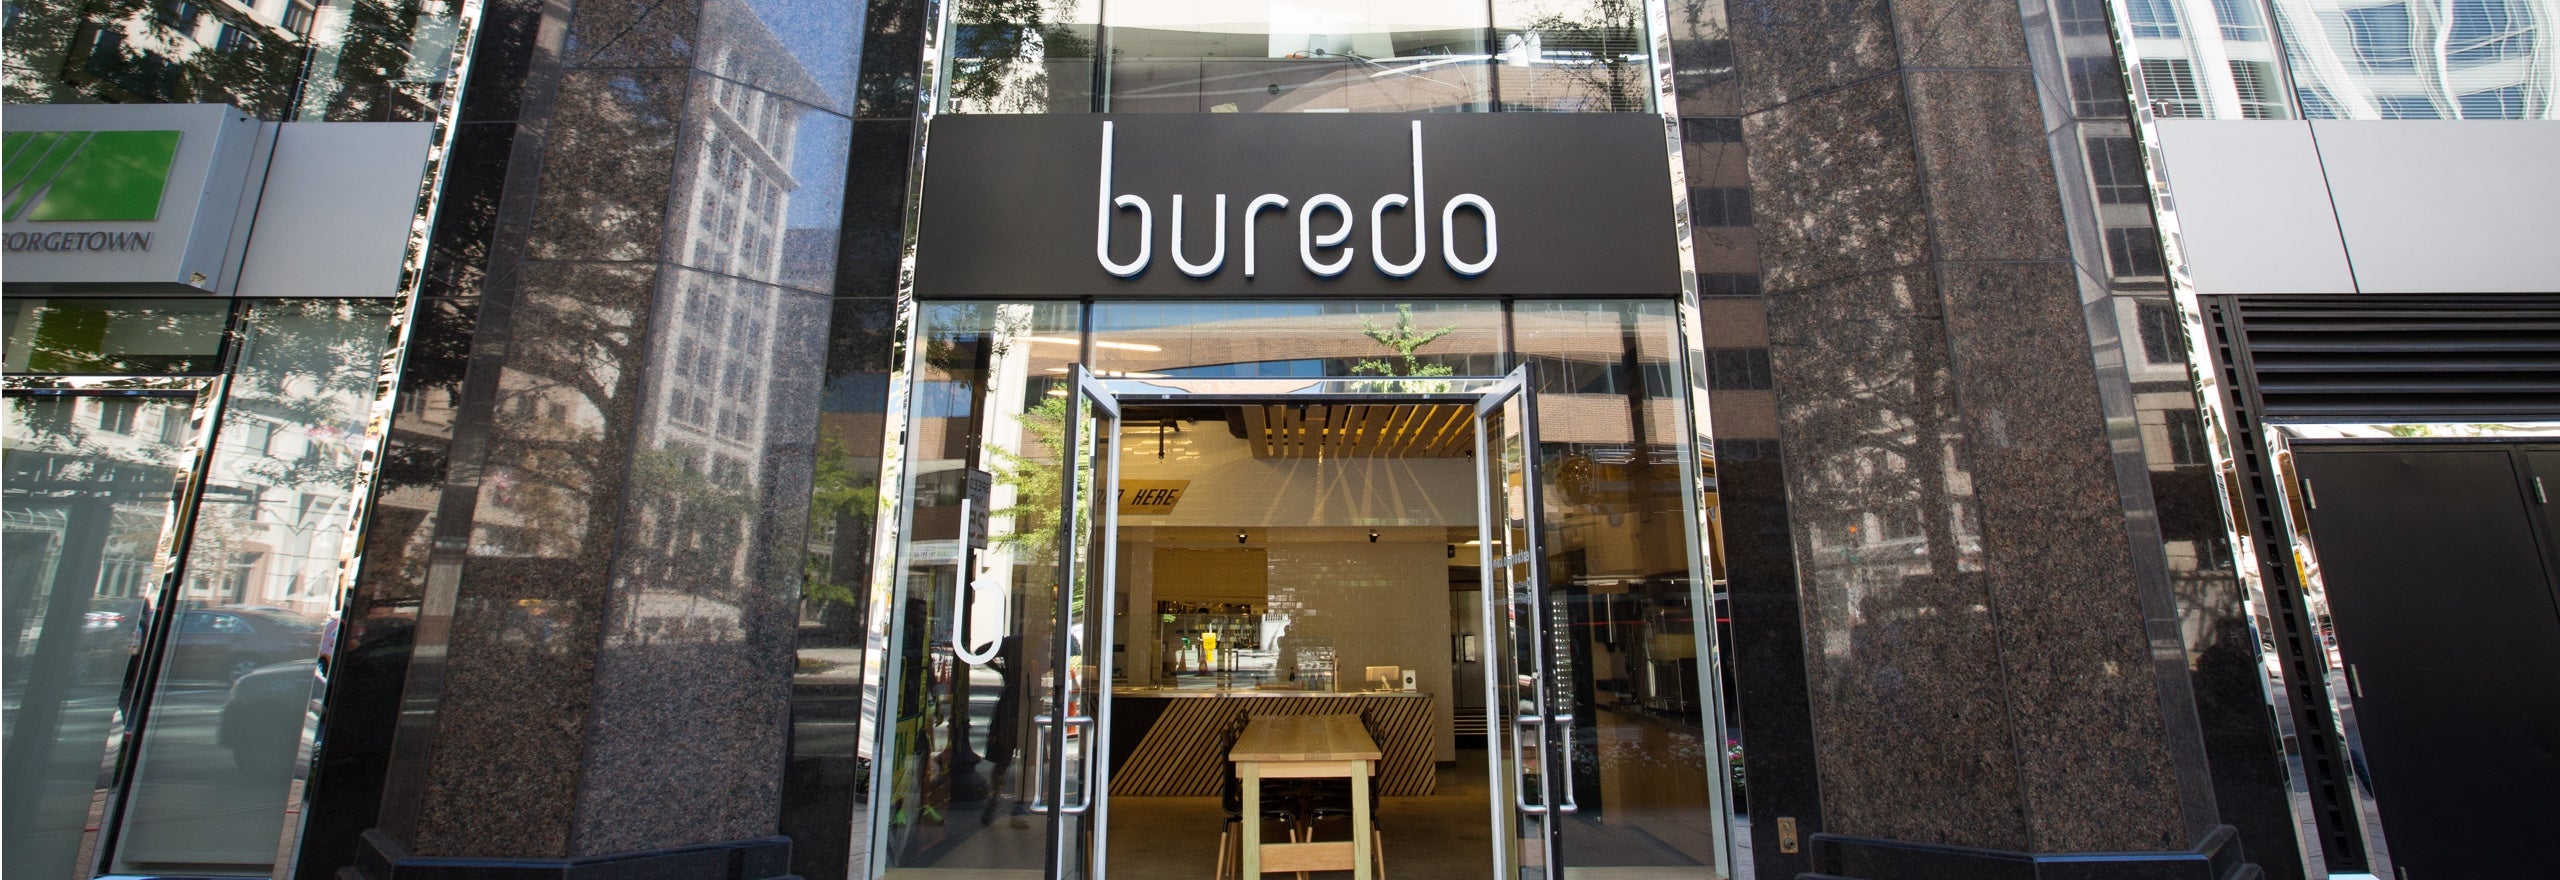 REQ Buredo Storefront